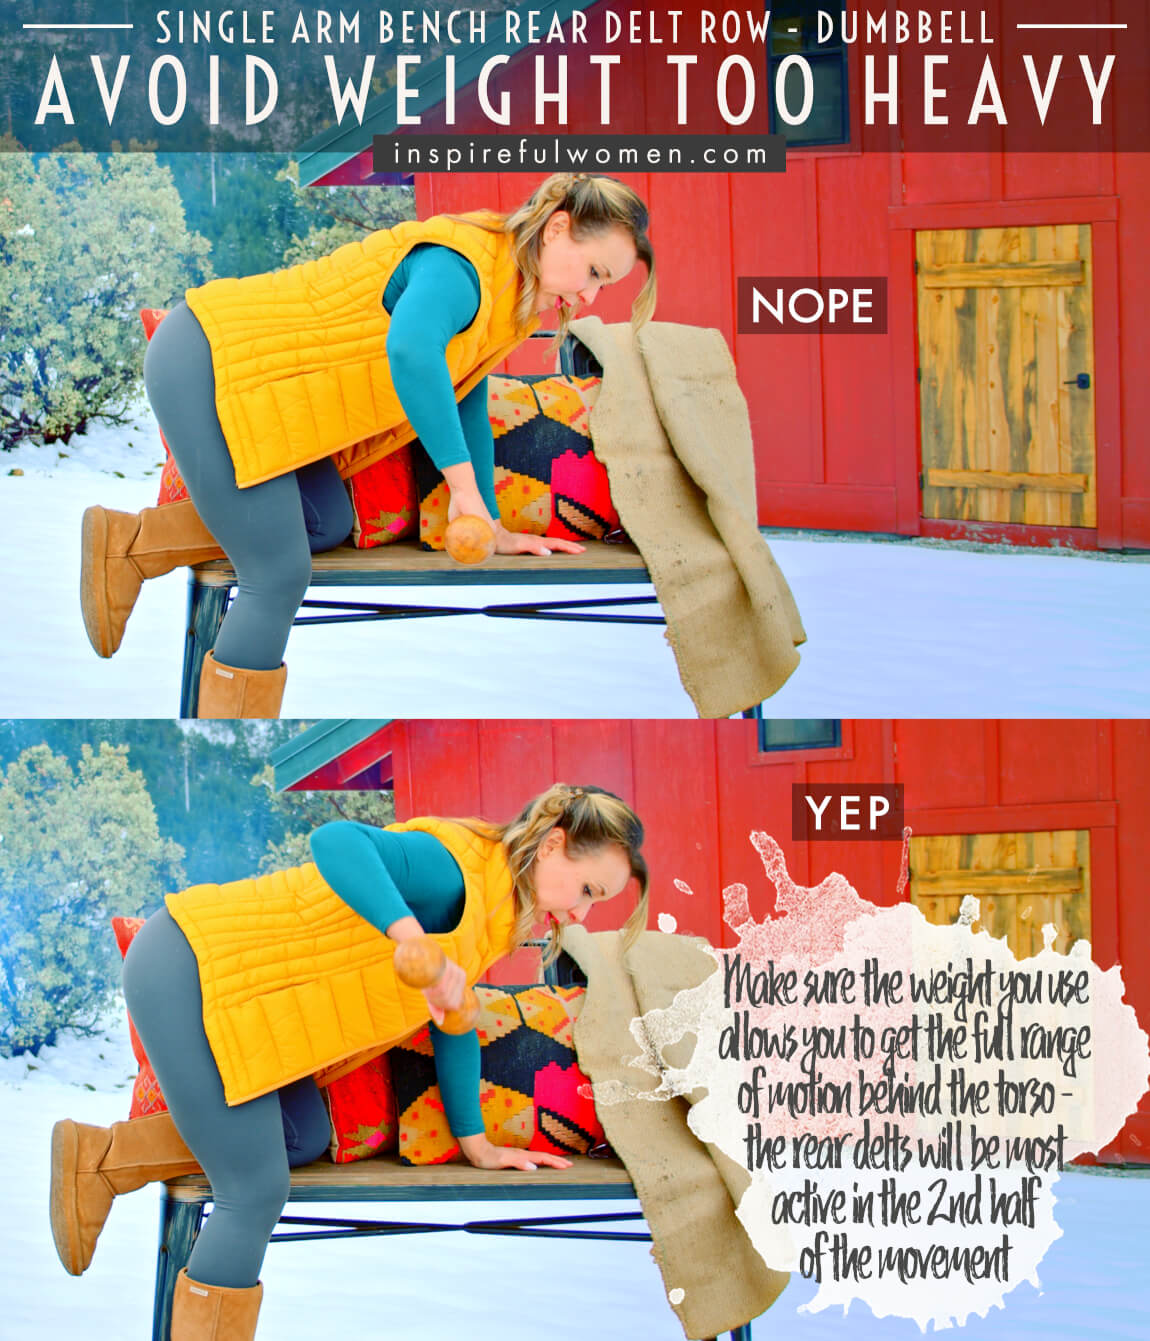 avoid-weight-too-heavy-dumbbell-single-arm-bench-rear-delt-row-proper-form